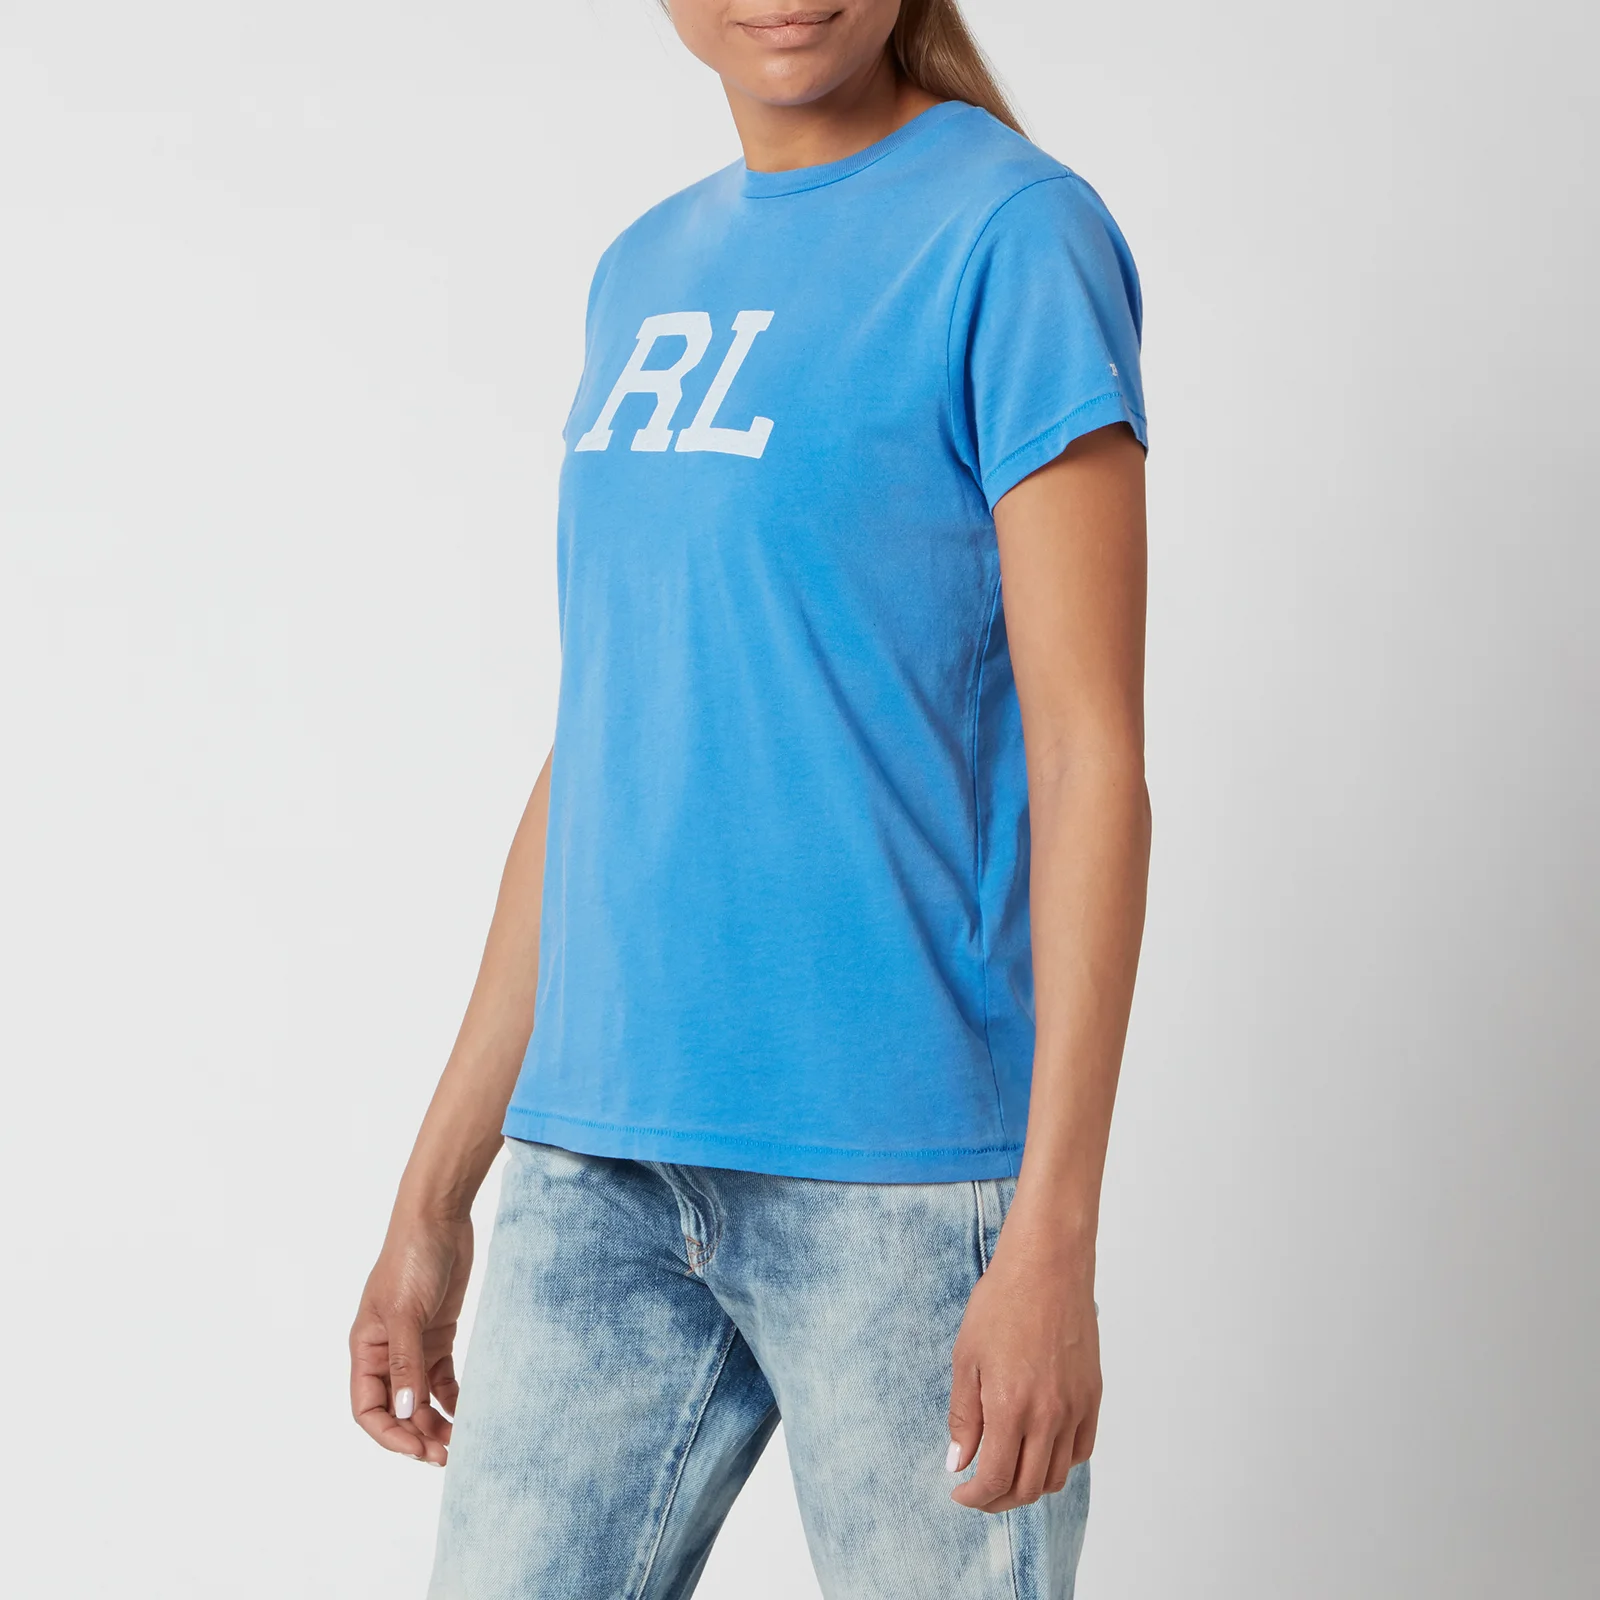 Polo Ralph Lauren Women's Rl Logo T-Shirt - Colby Blue Image 1